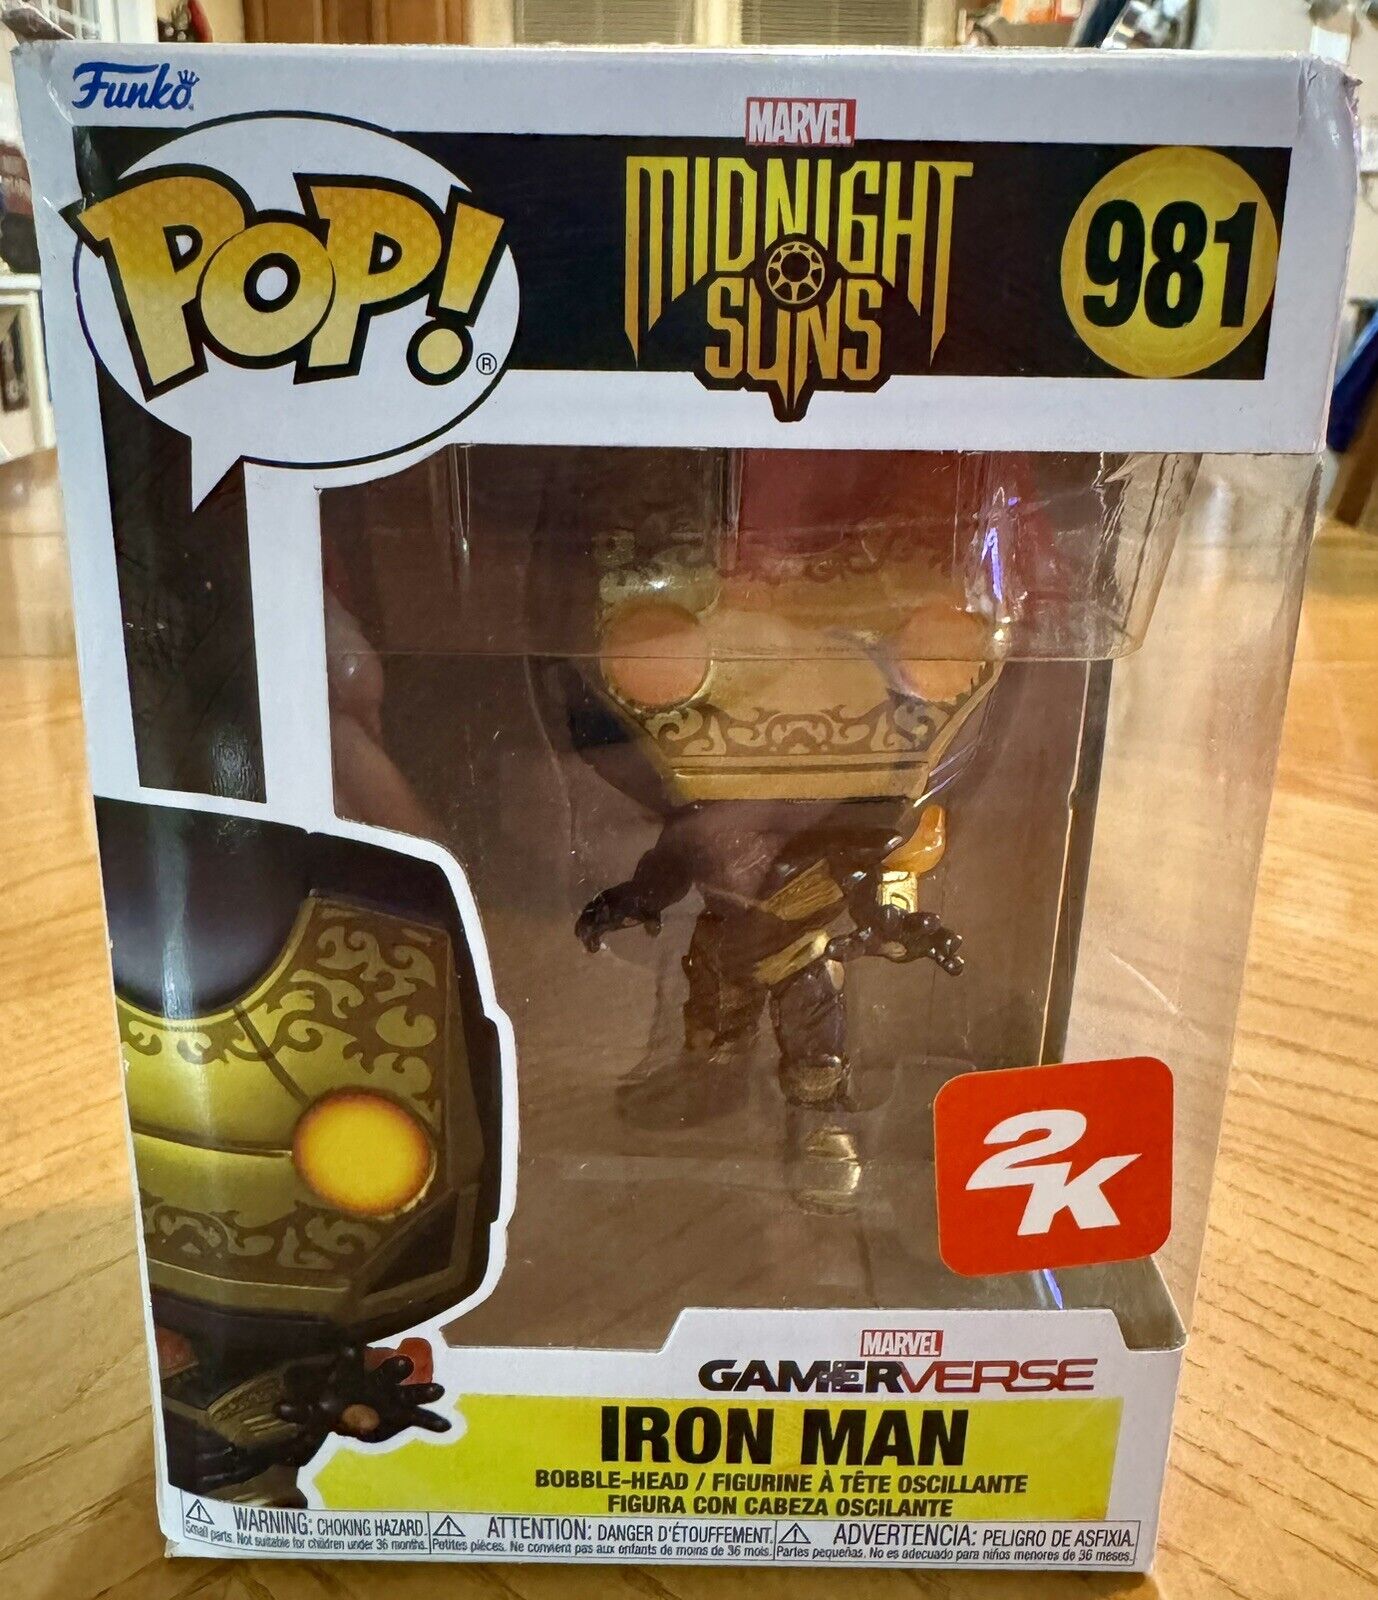 Funko Pop Marvel Studios Midnight Suns IRON MAN # 981 2K O9